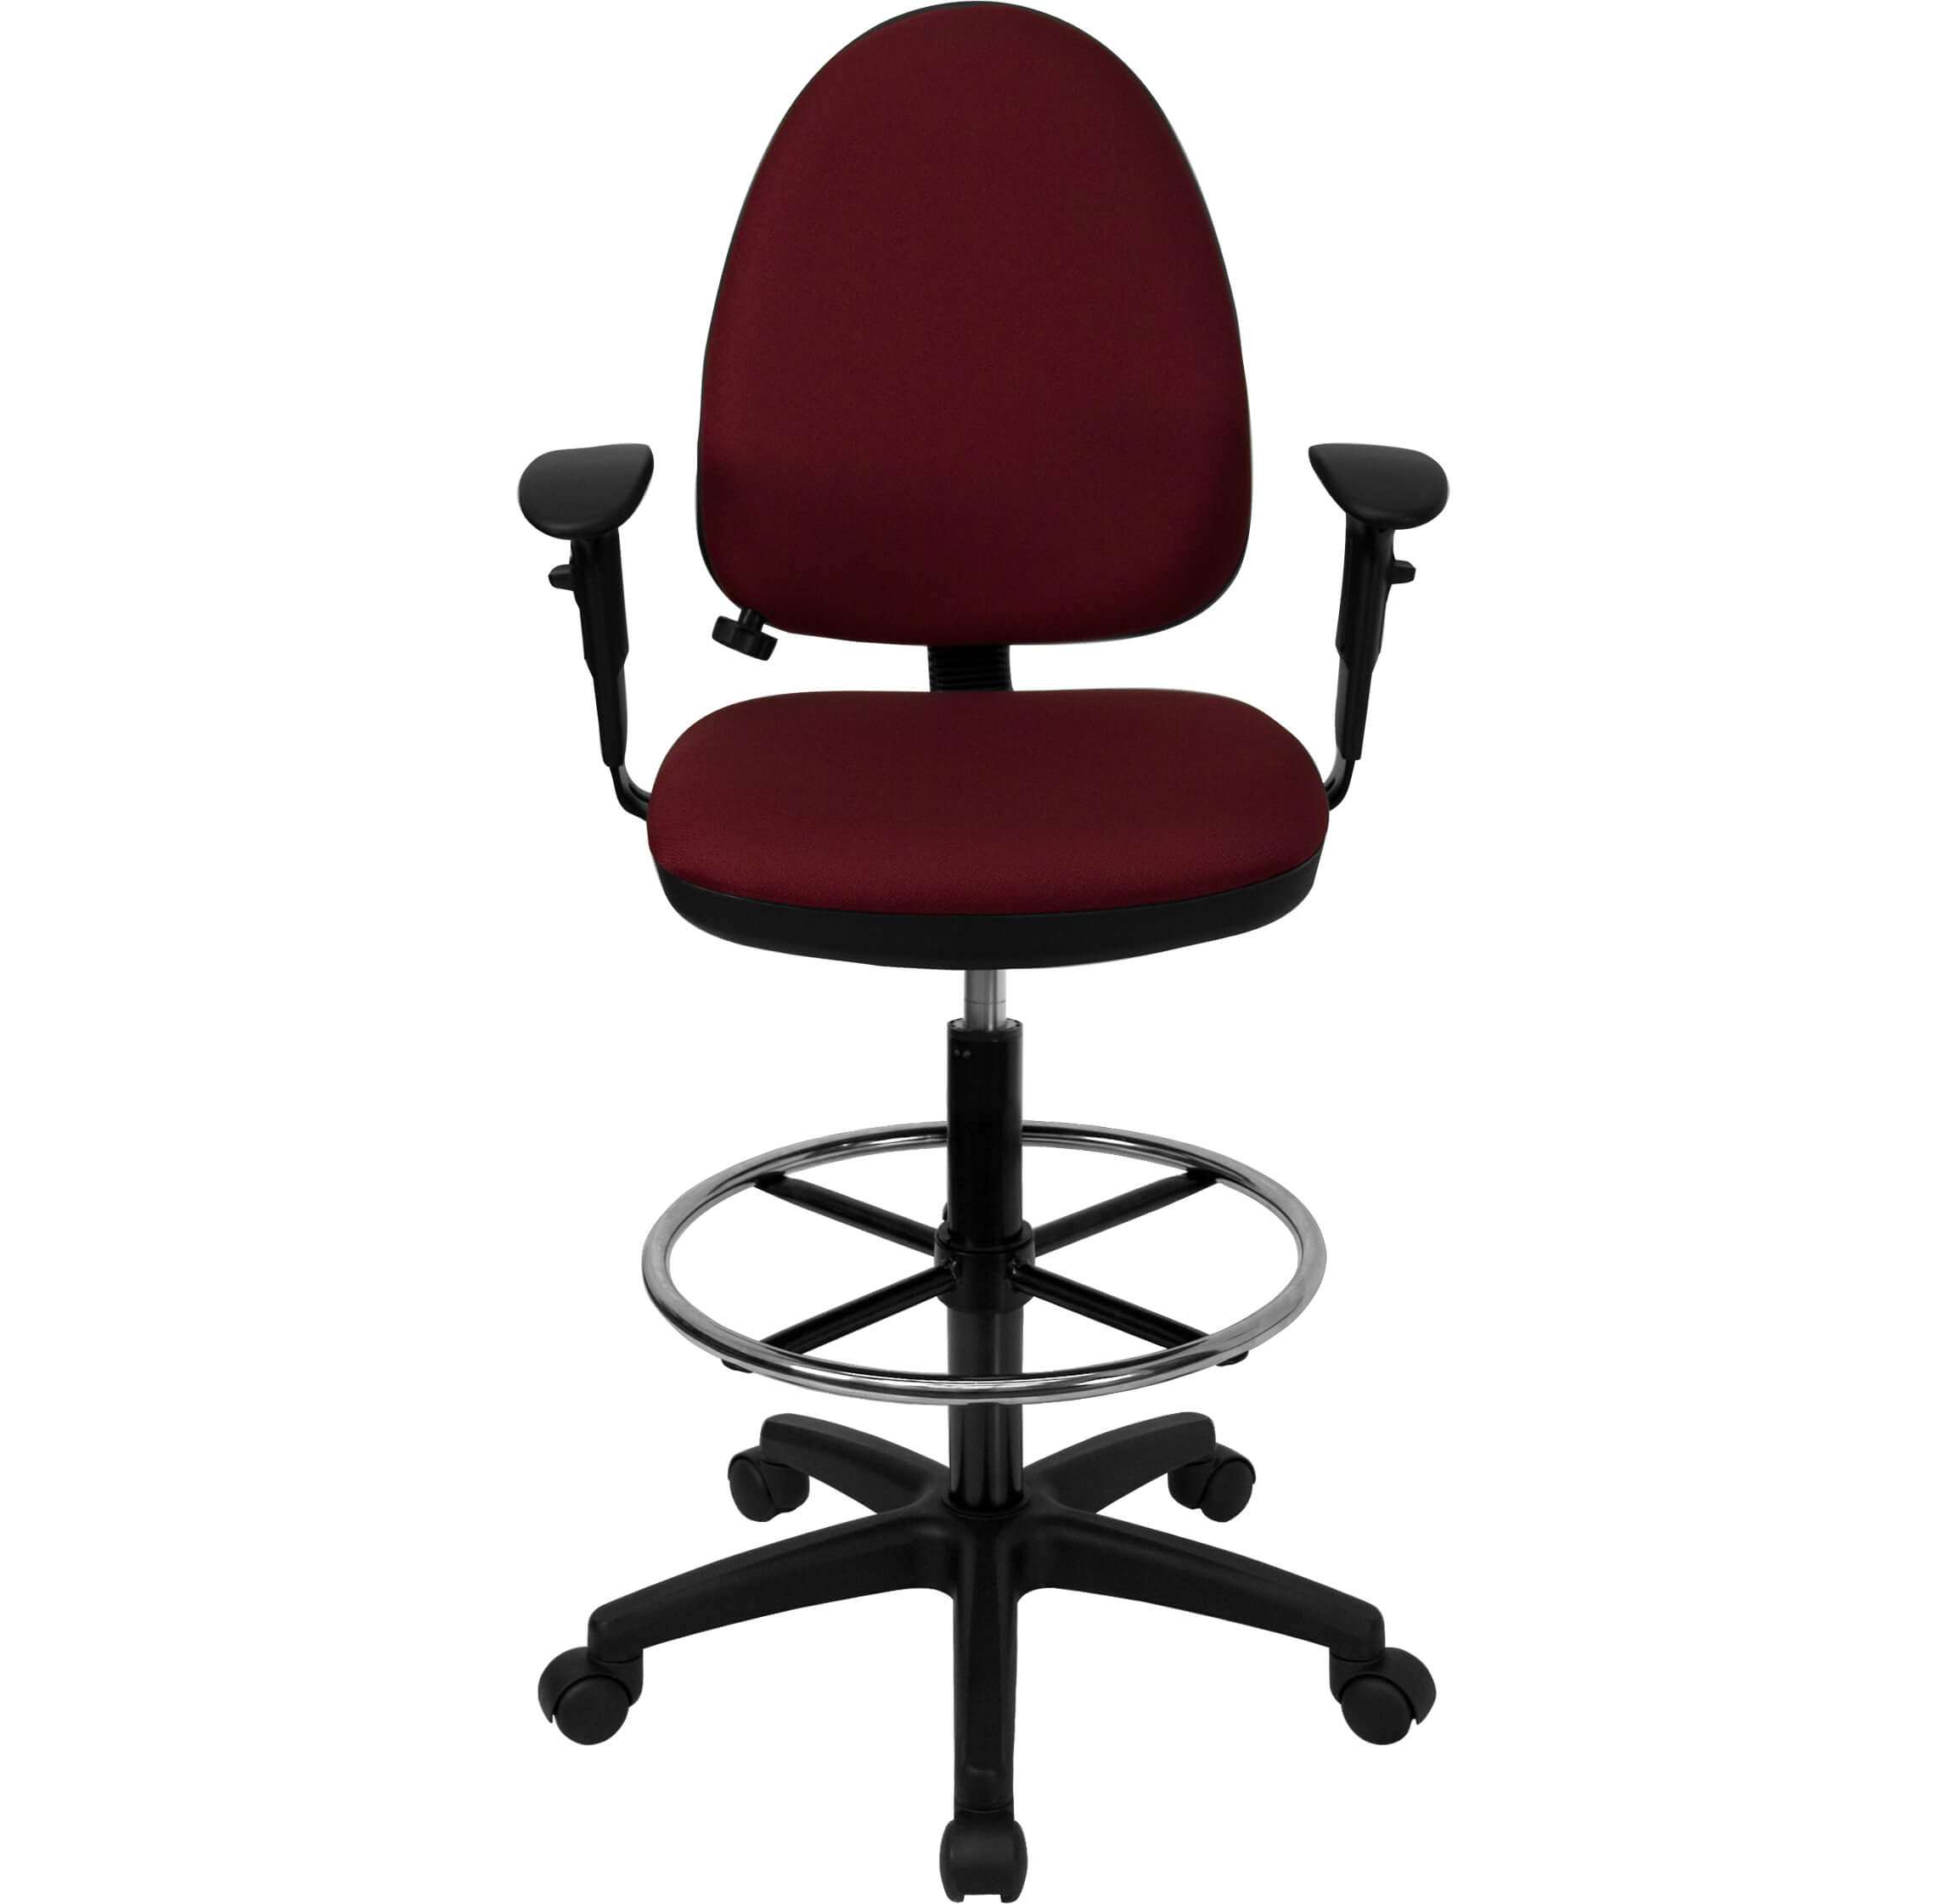 Cool desk chairs CUB WL A654MG BY AD GG FLA